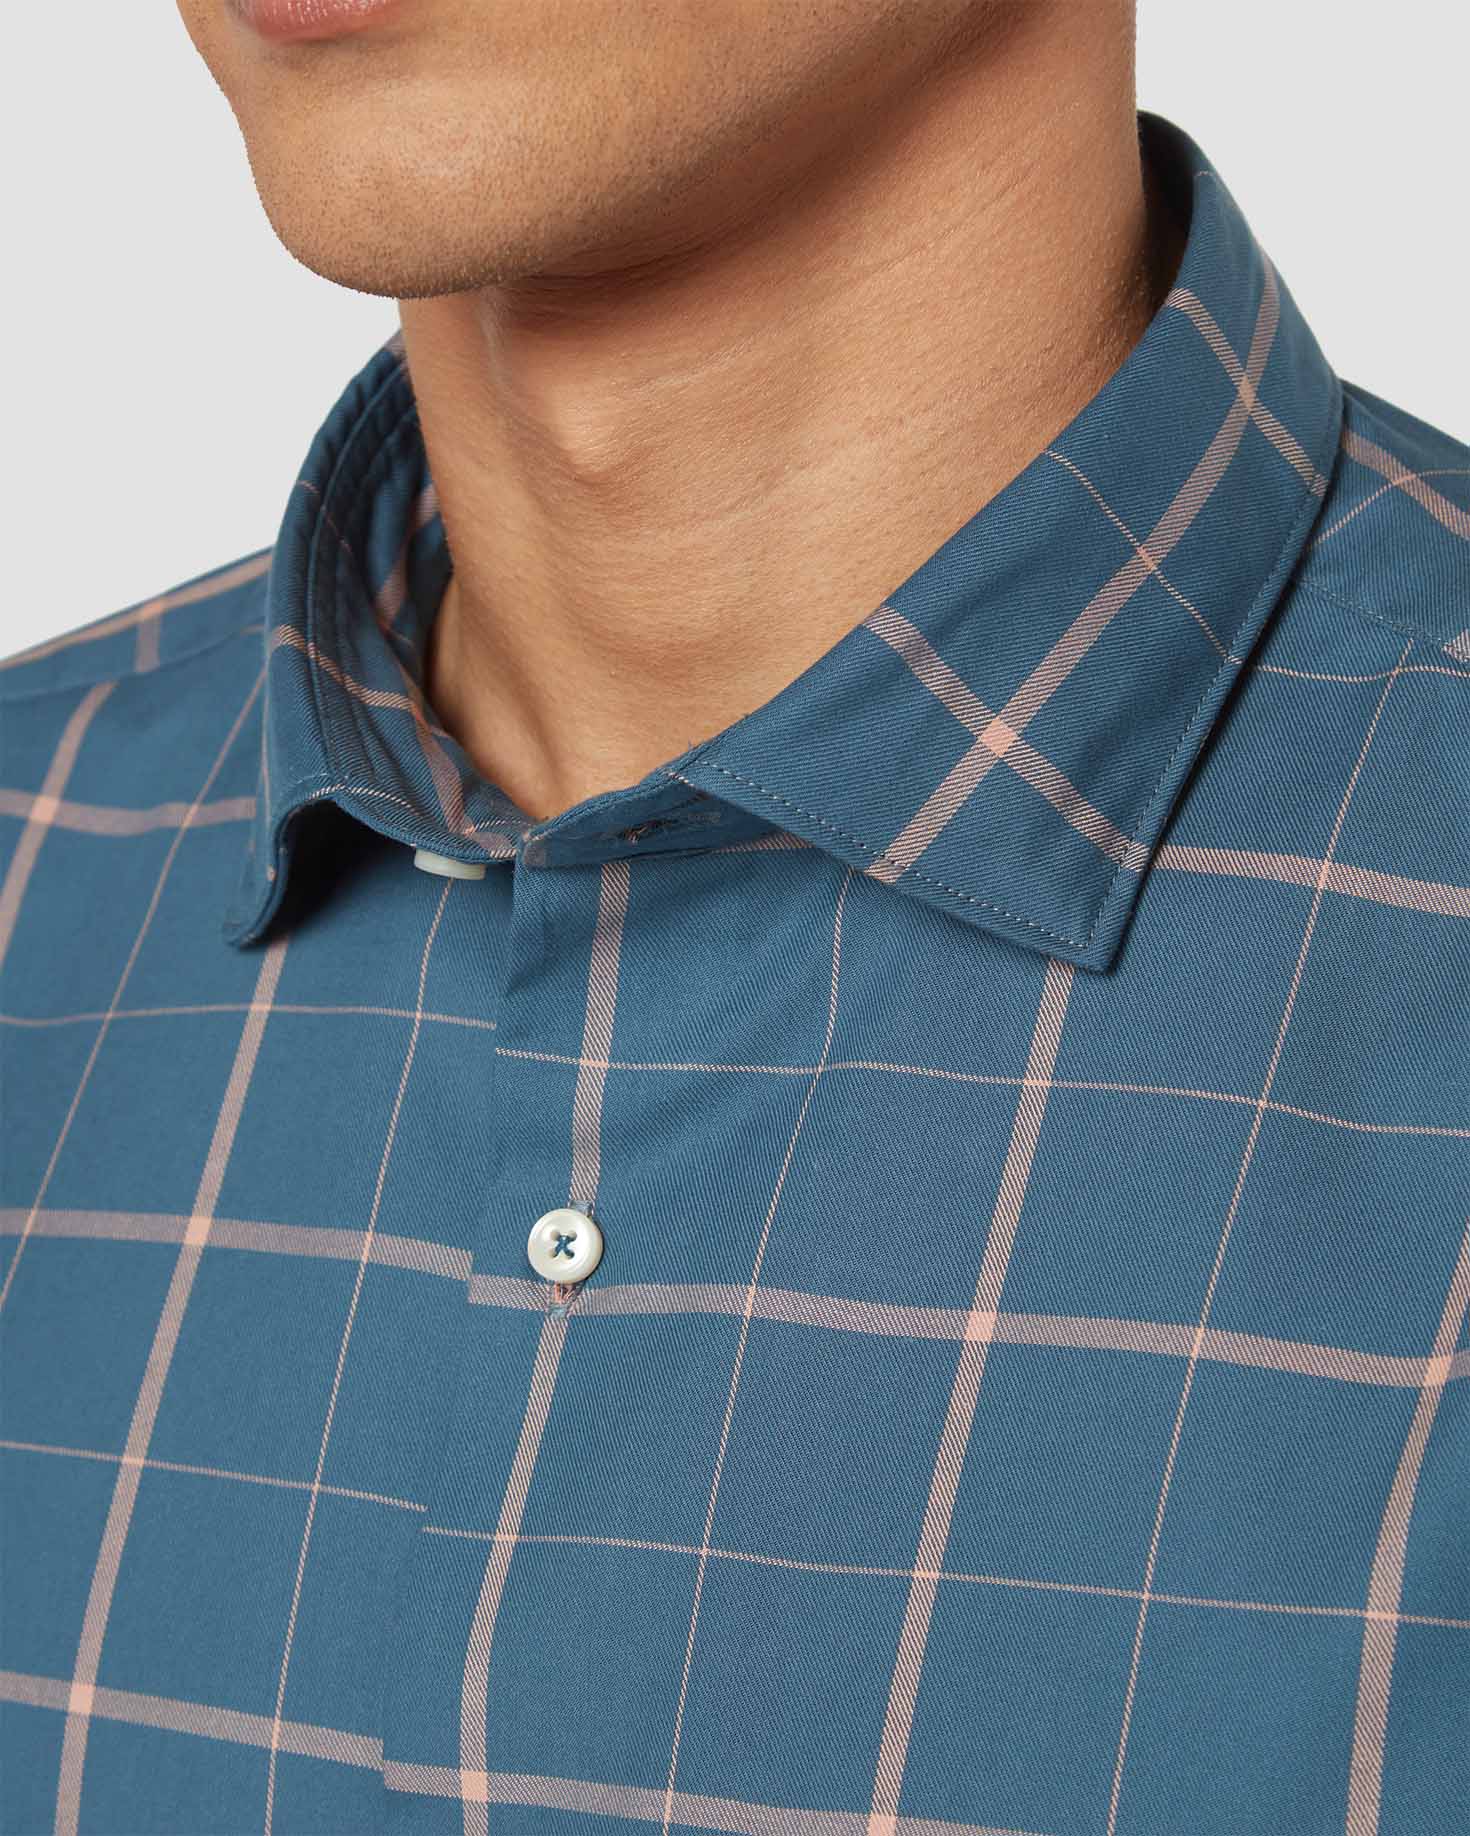 Bombay Shirt Company - Blue Pop Checked Shirt